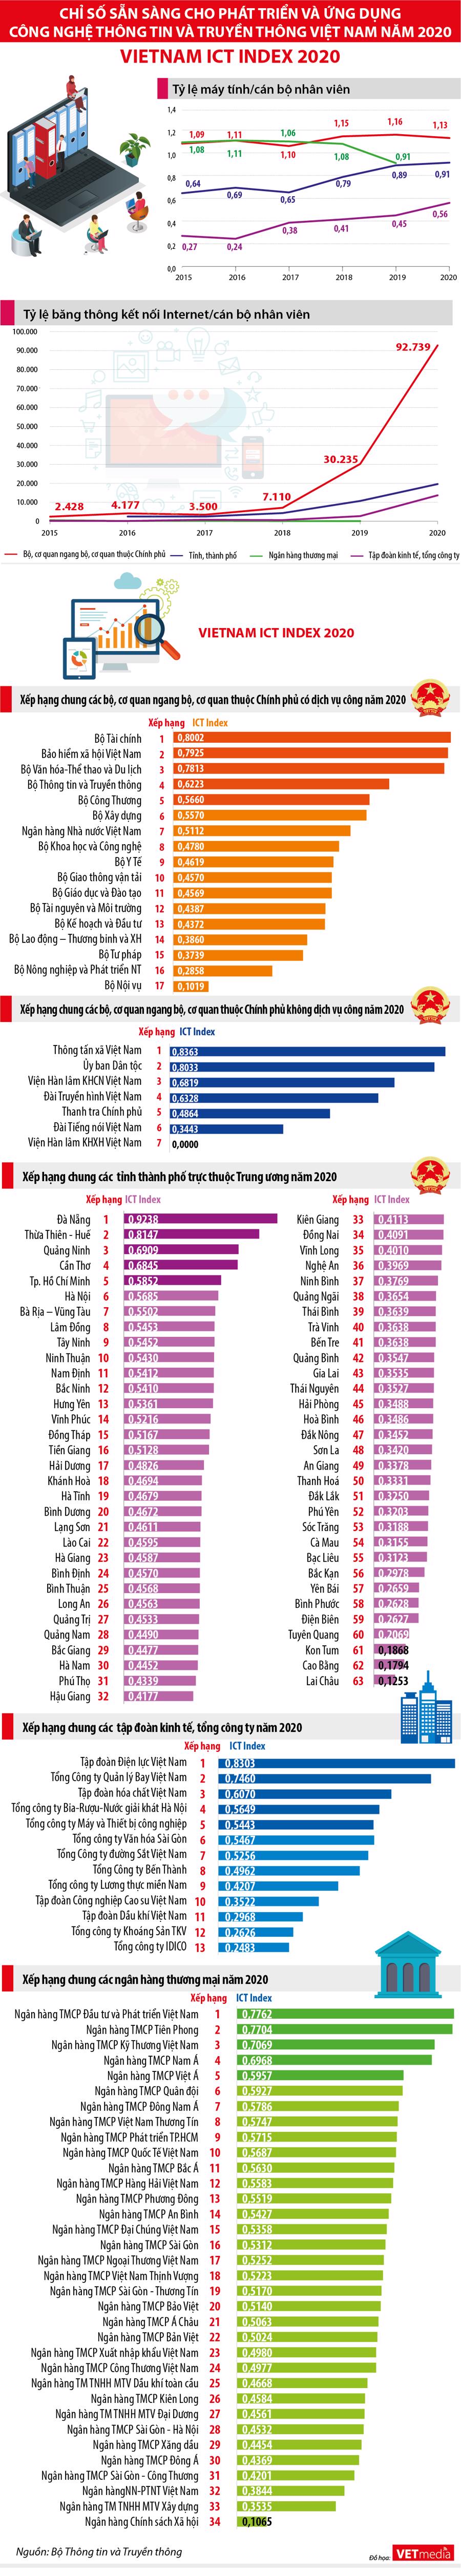 Kết quả xếp hạng Vietnam ICT Index 2020